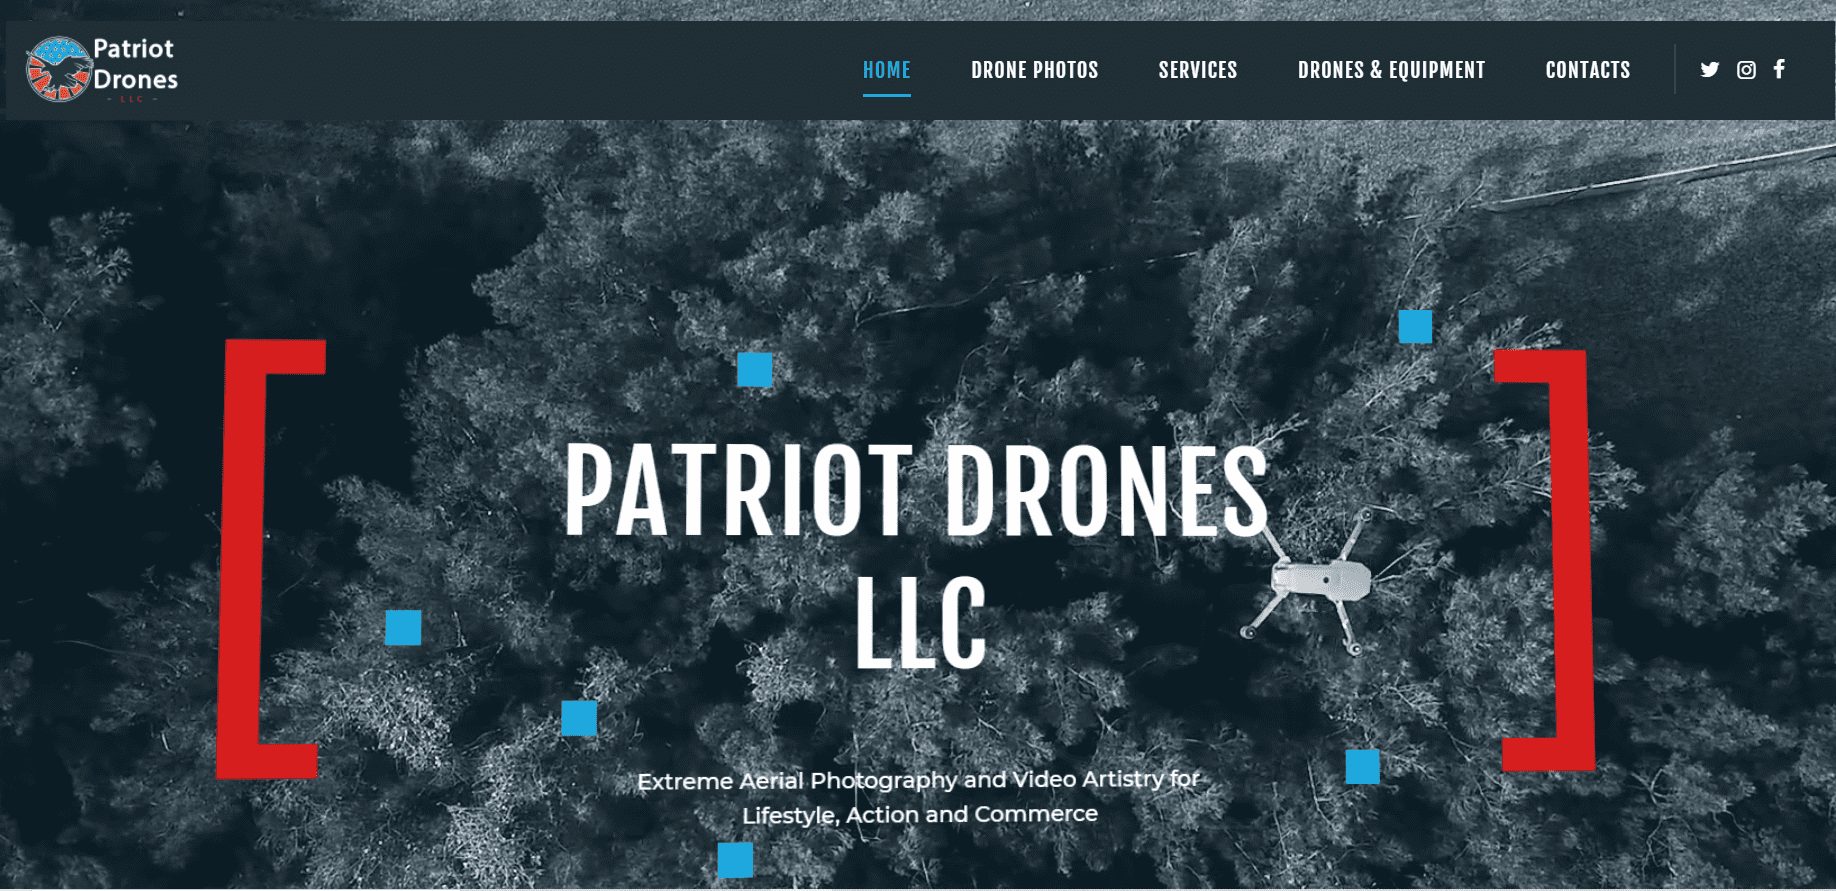 Patriot drones screenshot